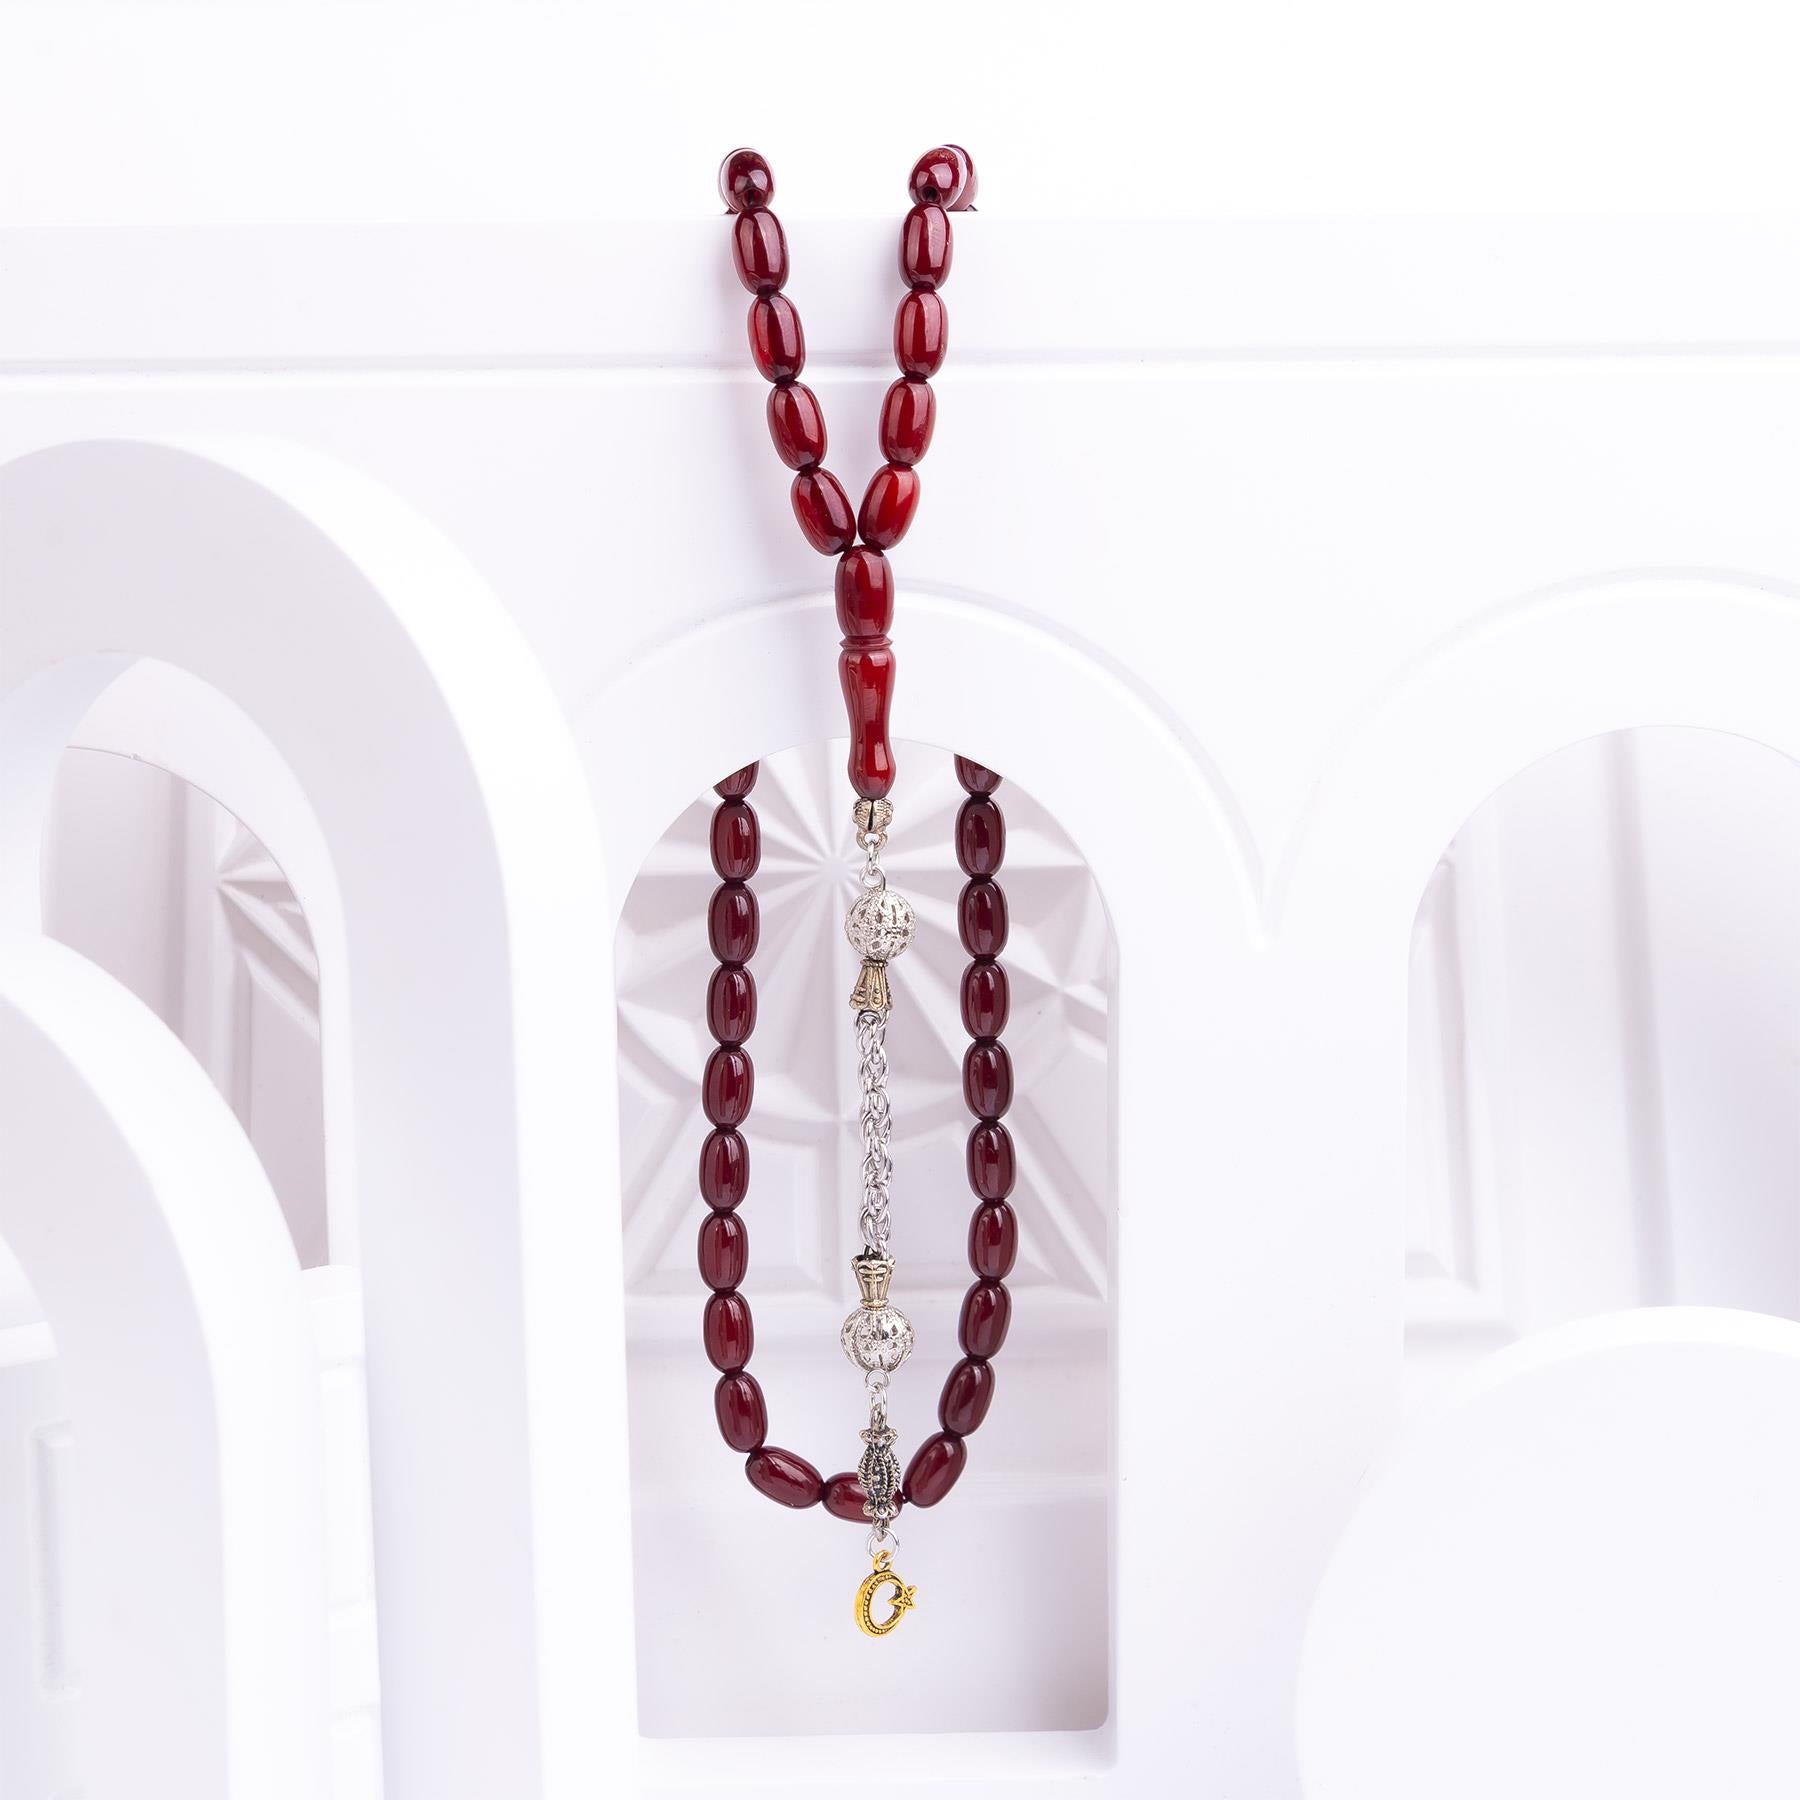 Ve Tesbih Amber Prayer Beads of 45 2